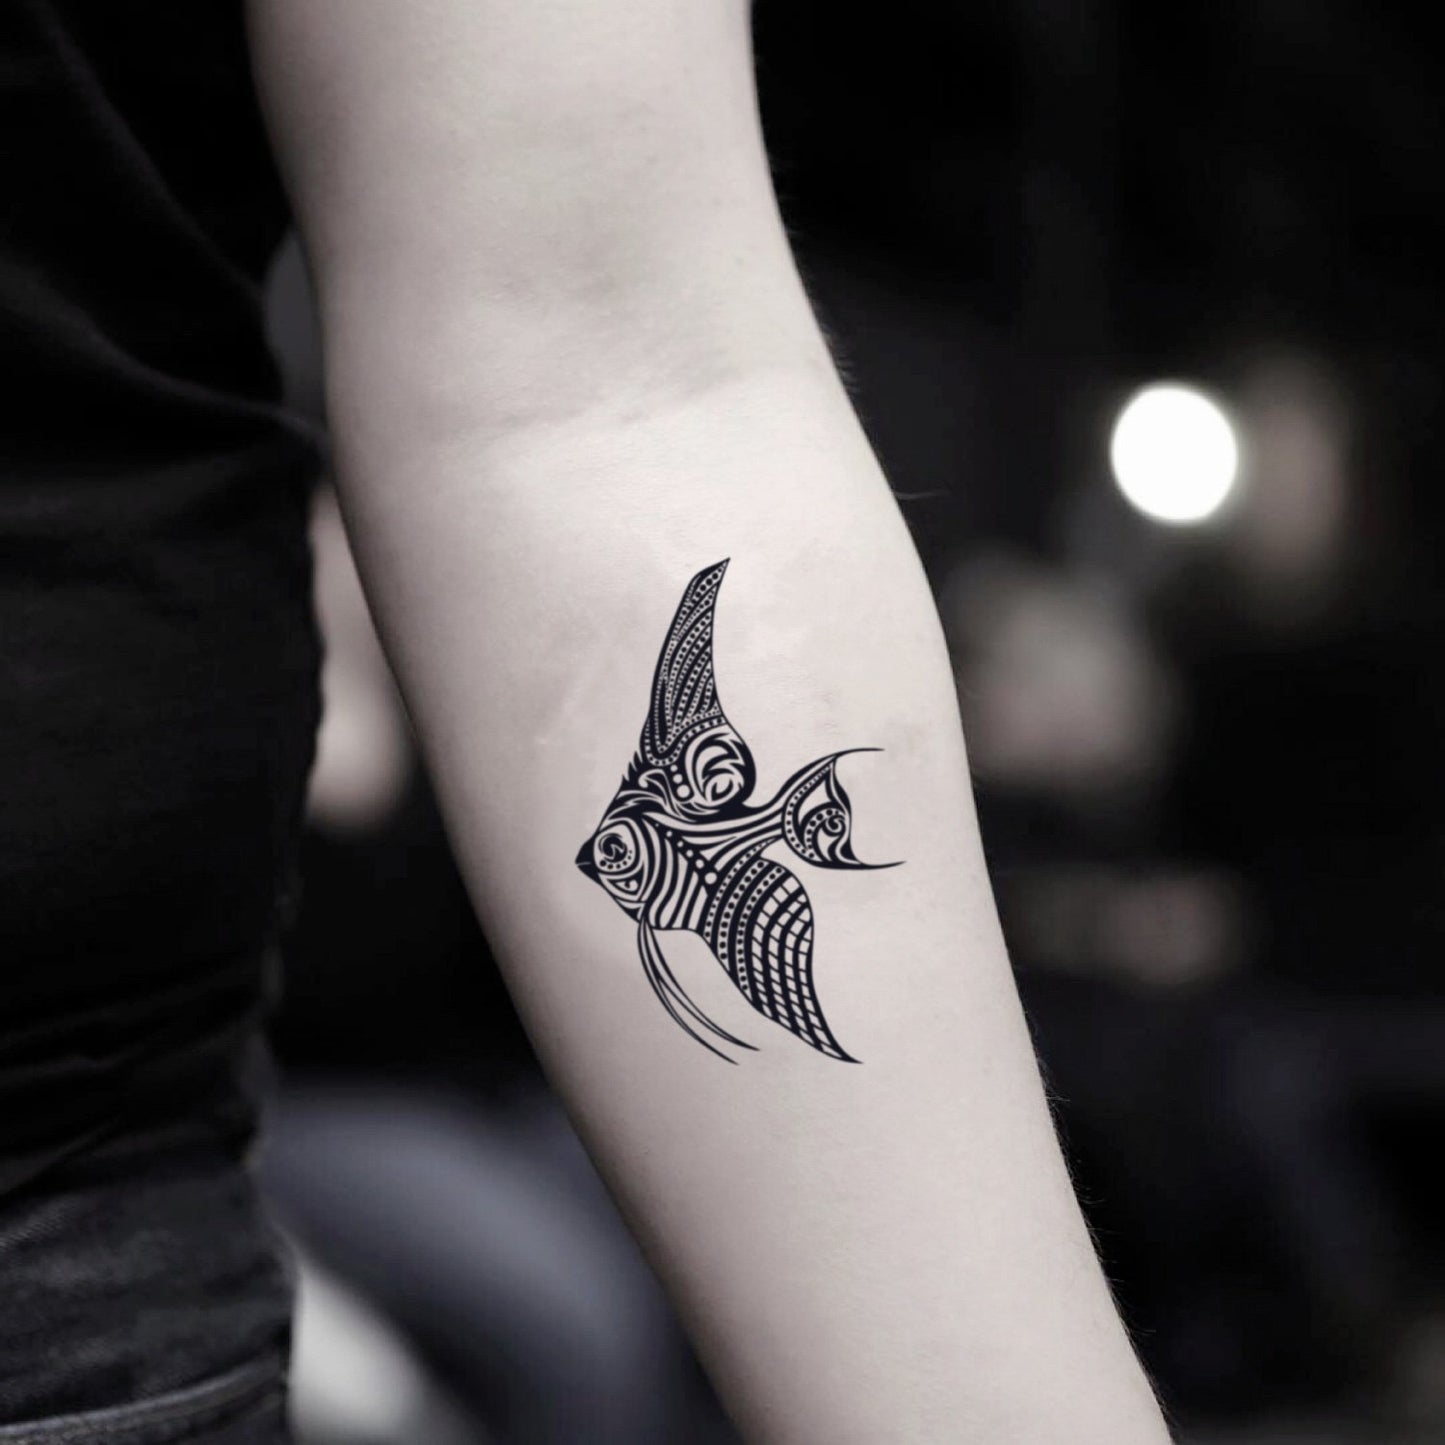 fake small angel fish animal temporary tattoo sticker design idea on inner arm